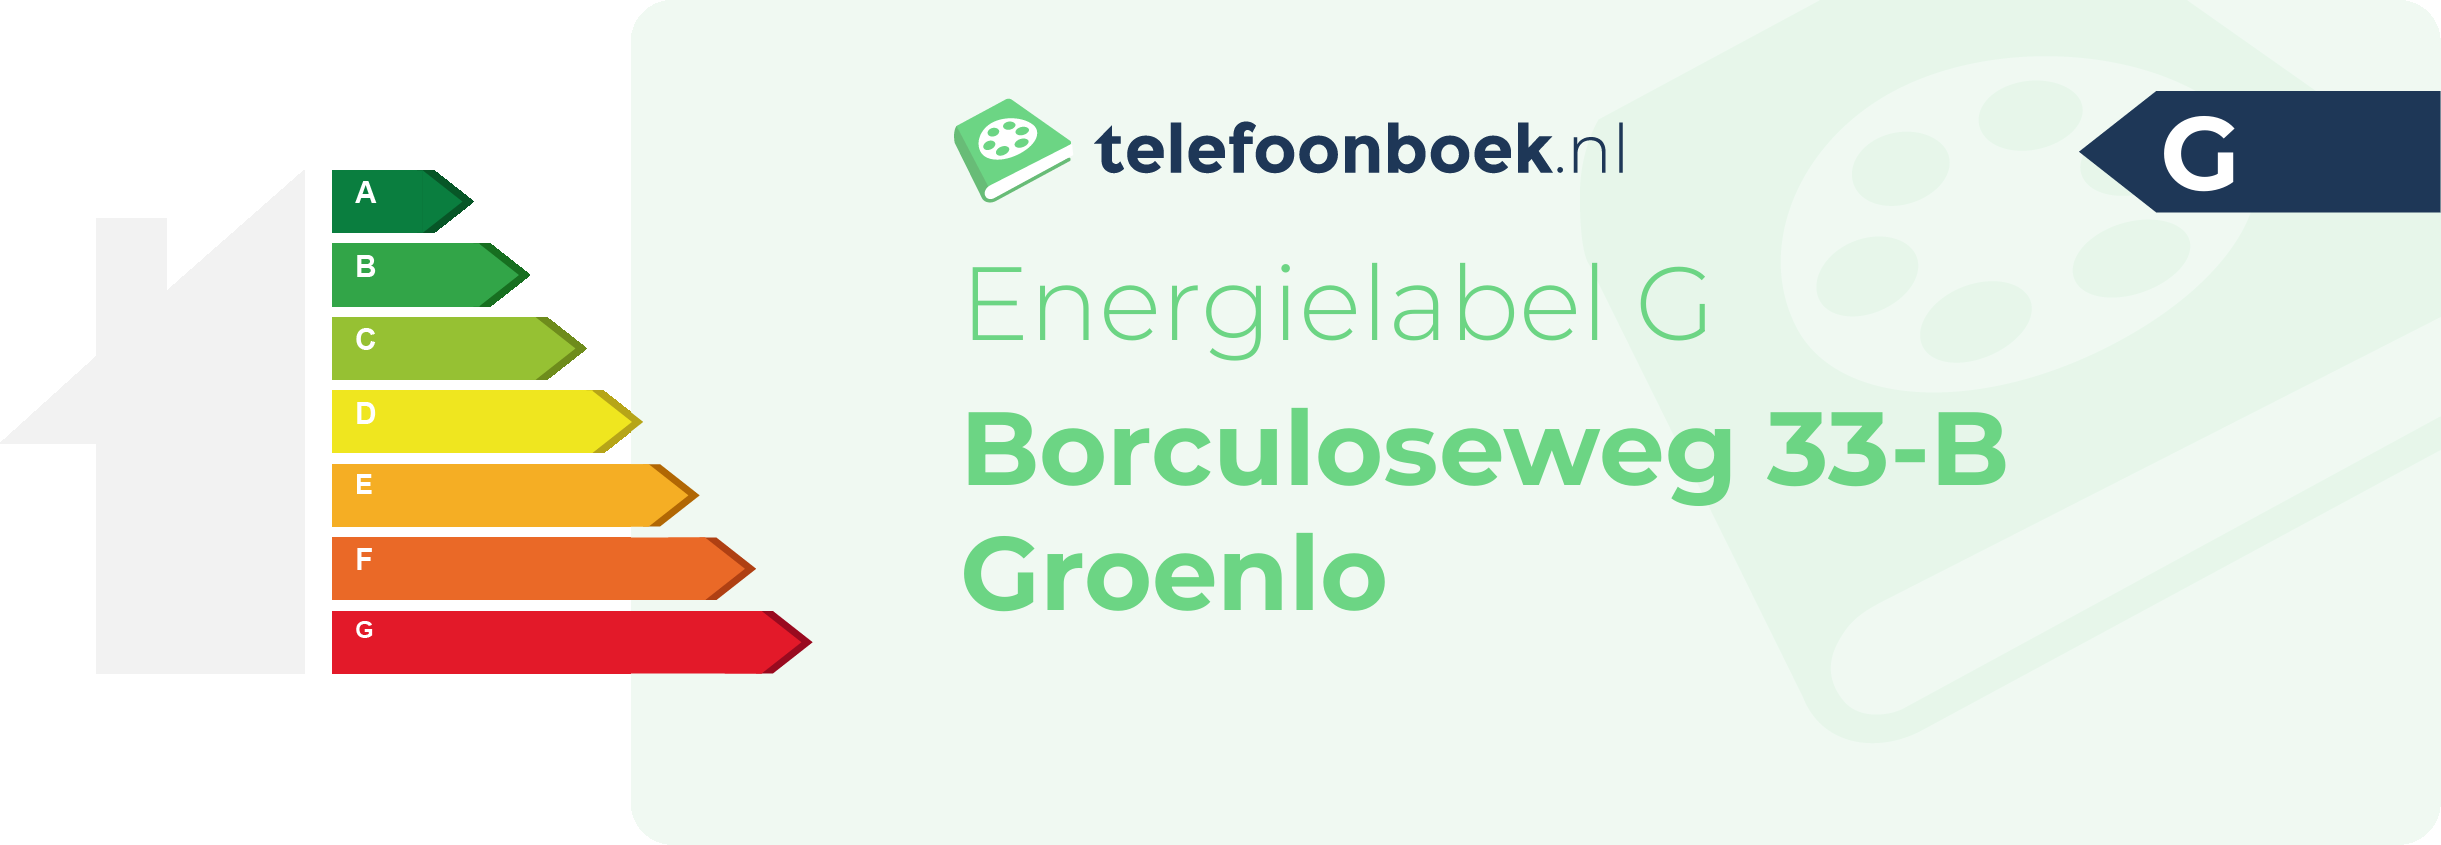 Energielabel Borculoseweg 33-B Groenlo